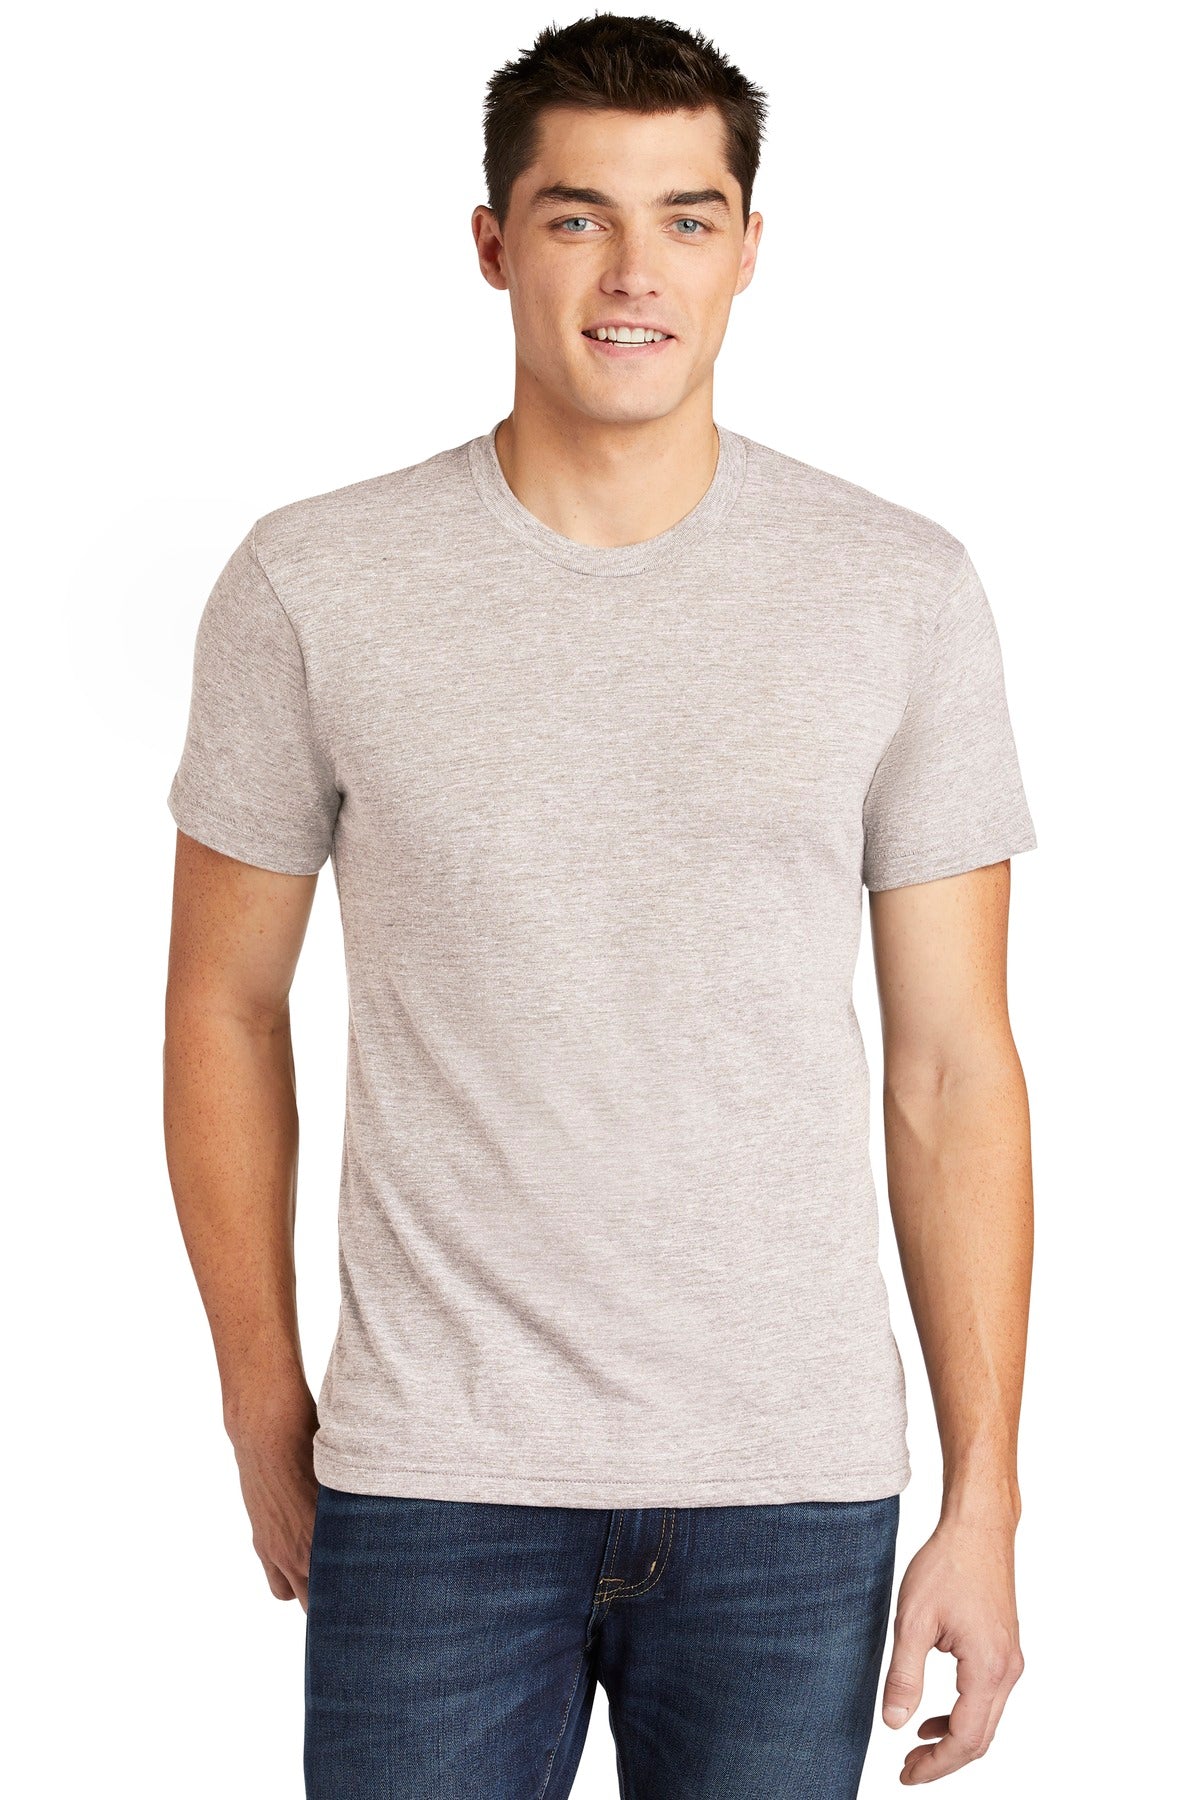 American Apparel Tri-Blend Short Sleeve Track T-Shirt. TR401W